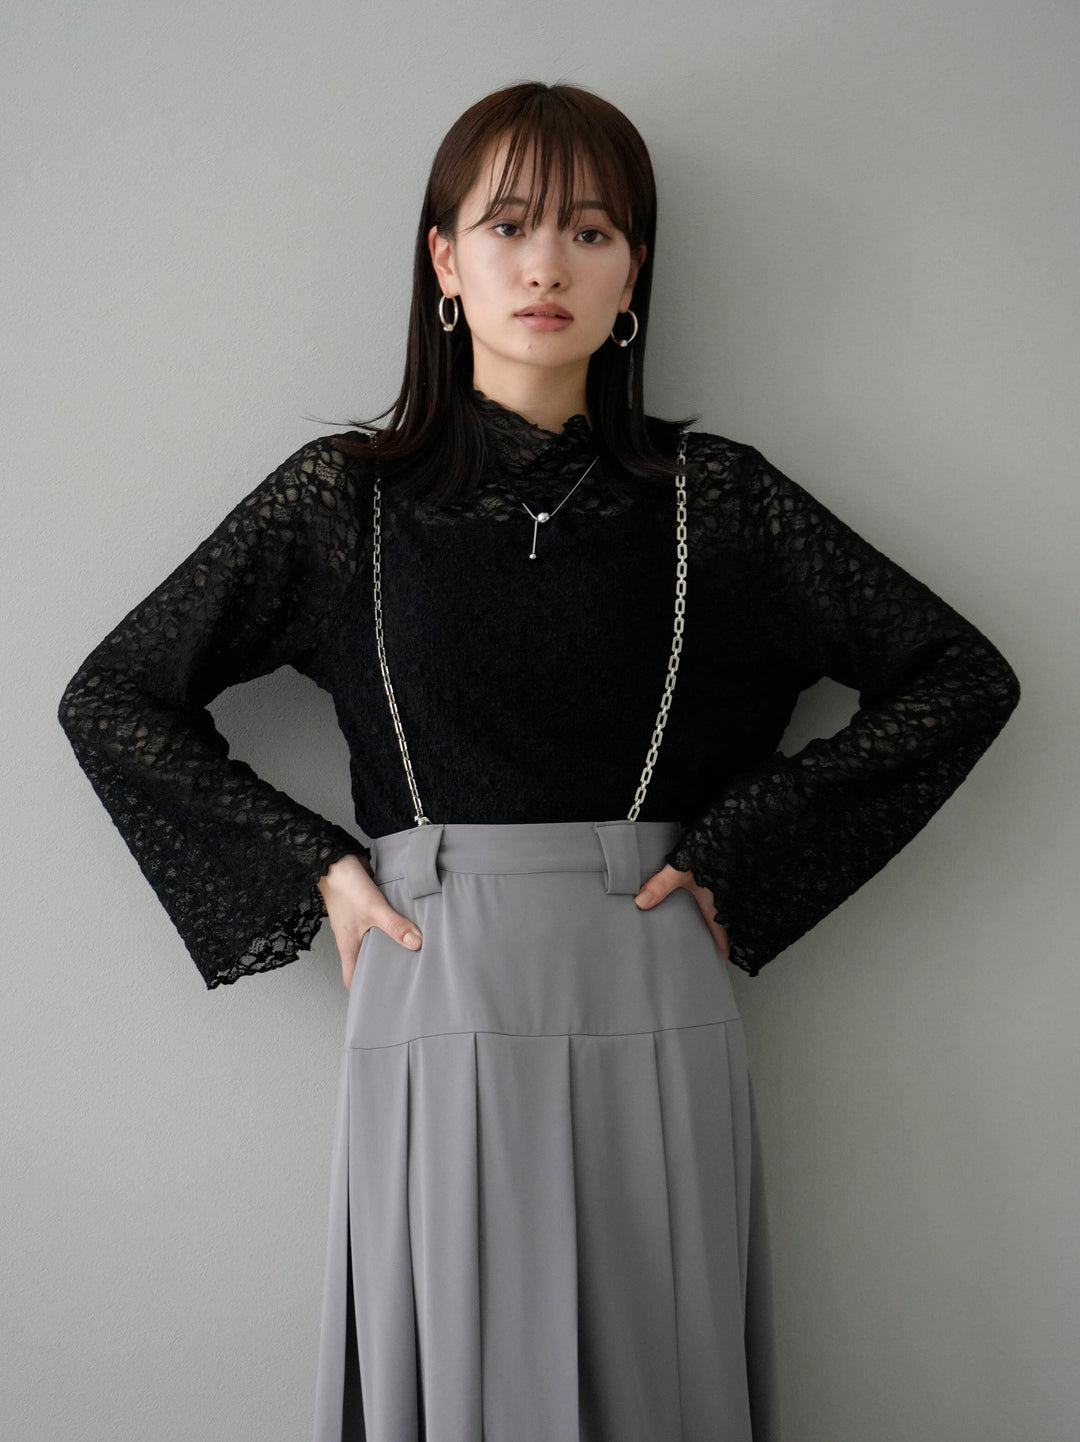 [SET] Chain suspender tuck skirt + lace sheer top (2set)